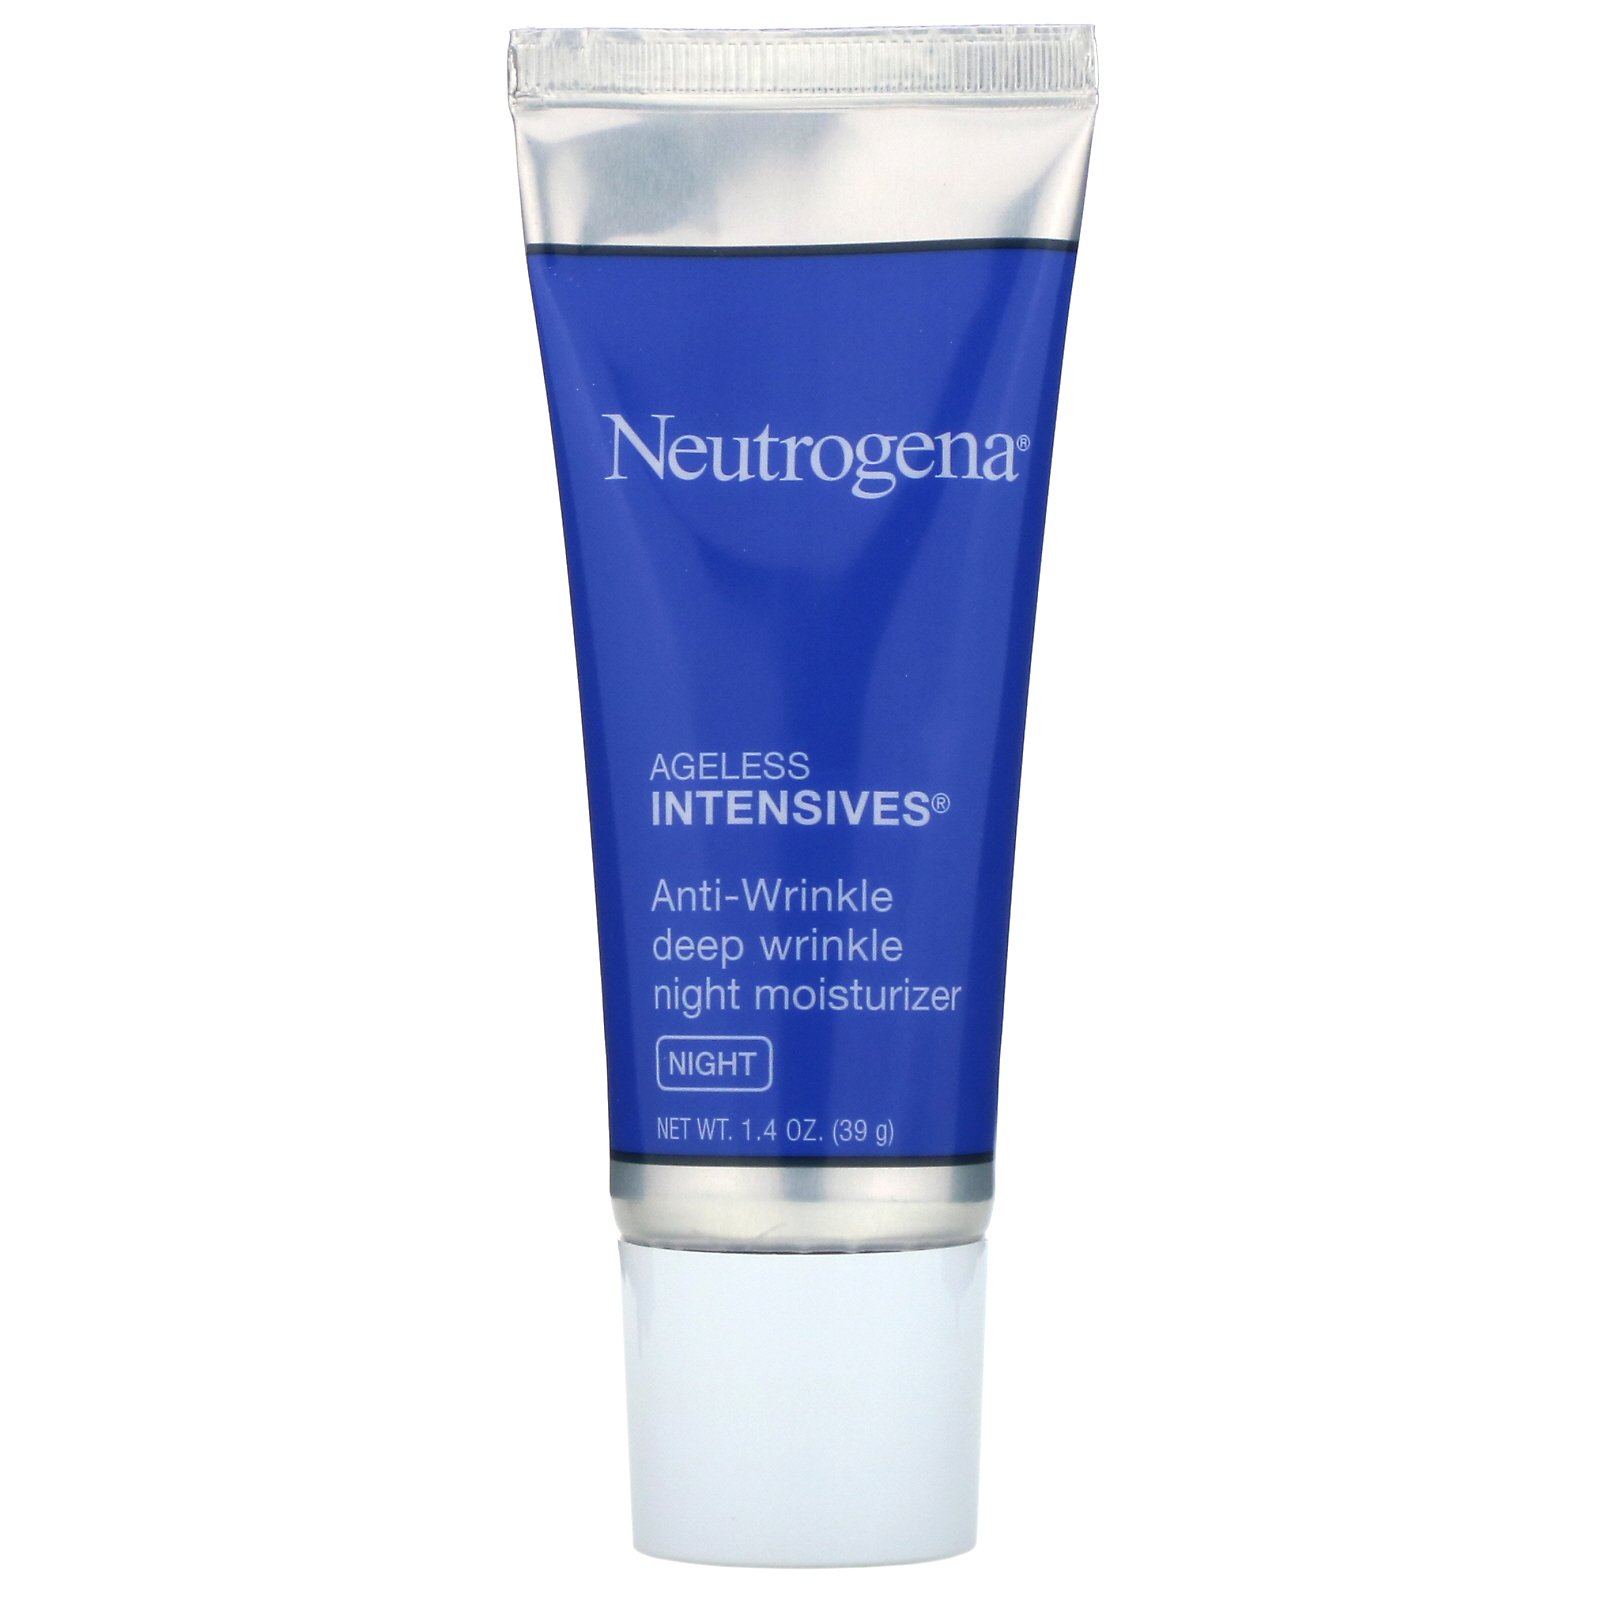 neutrogena wrinkle repair night moisturizer review